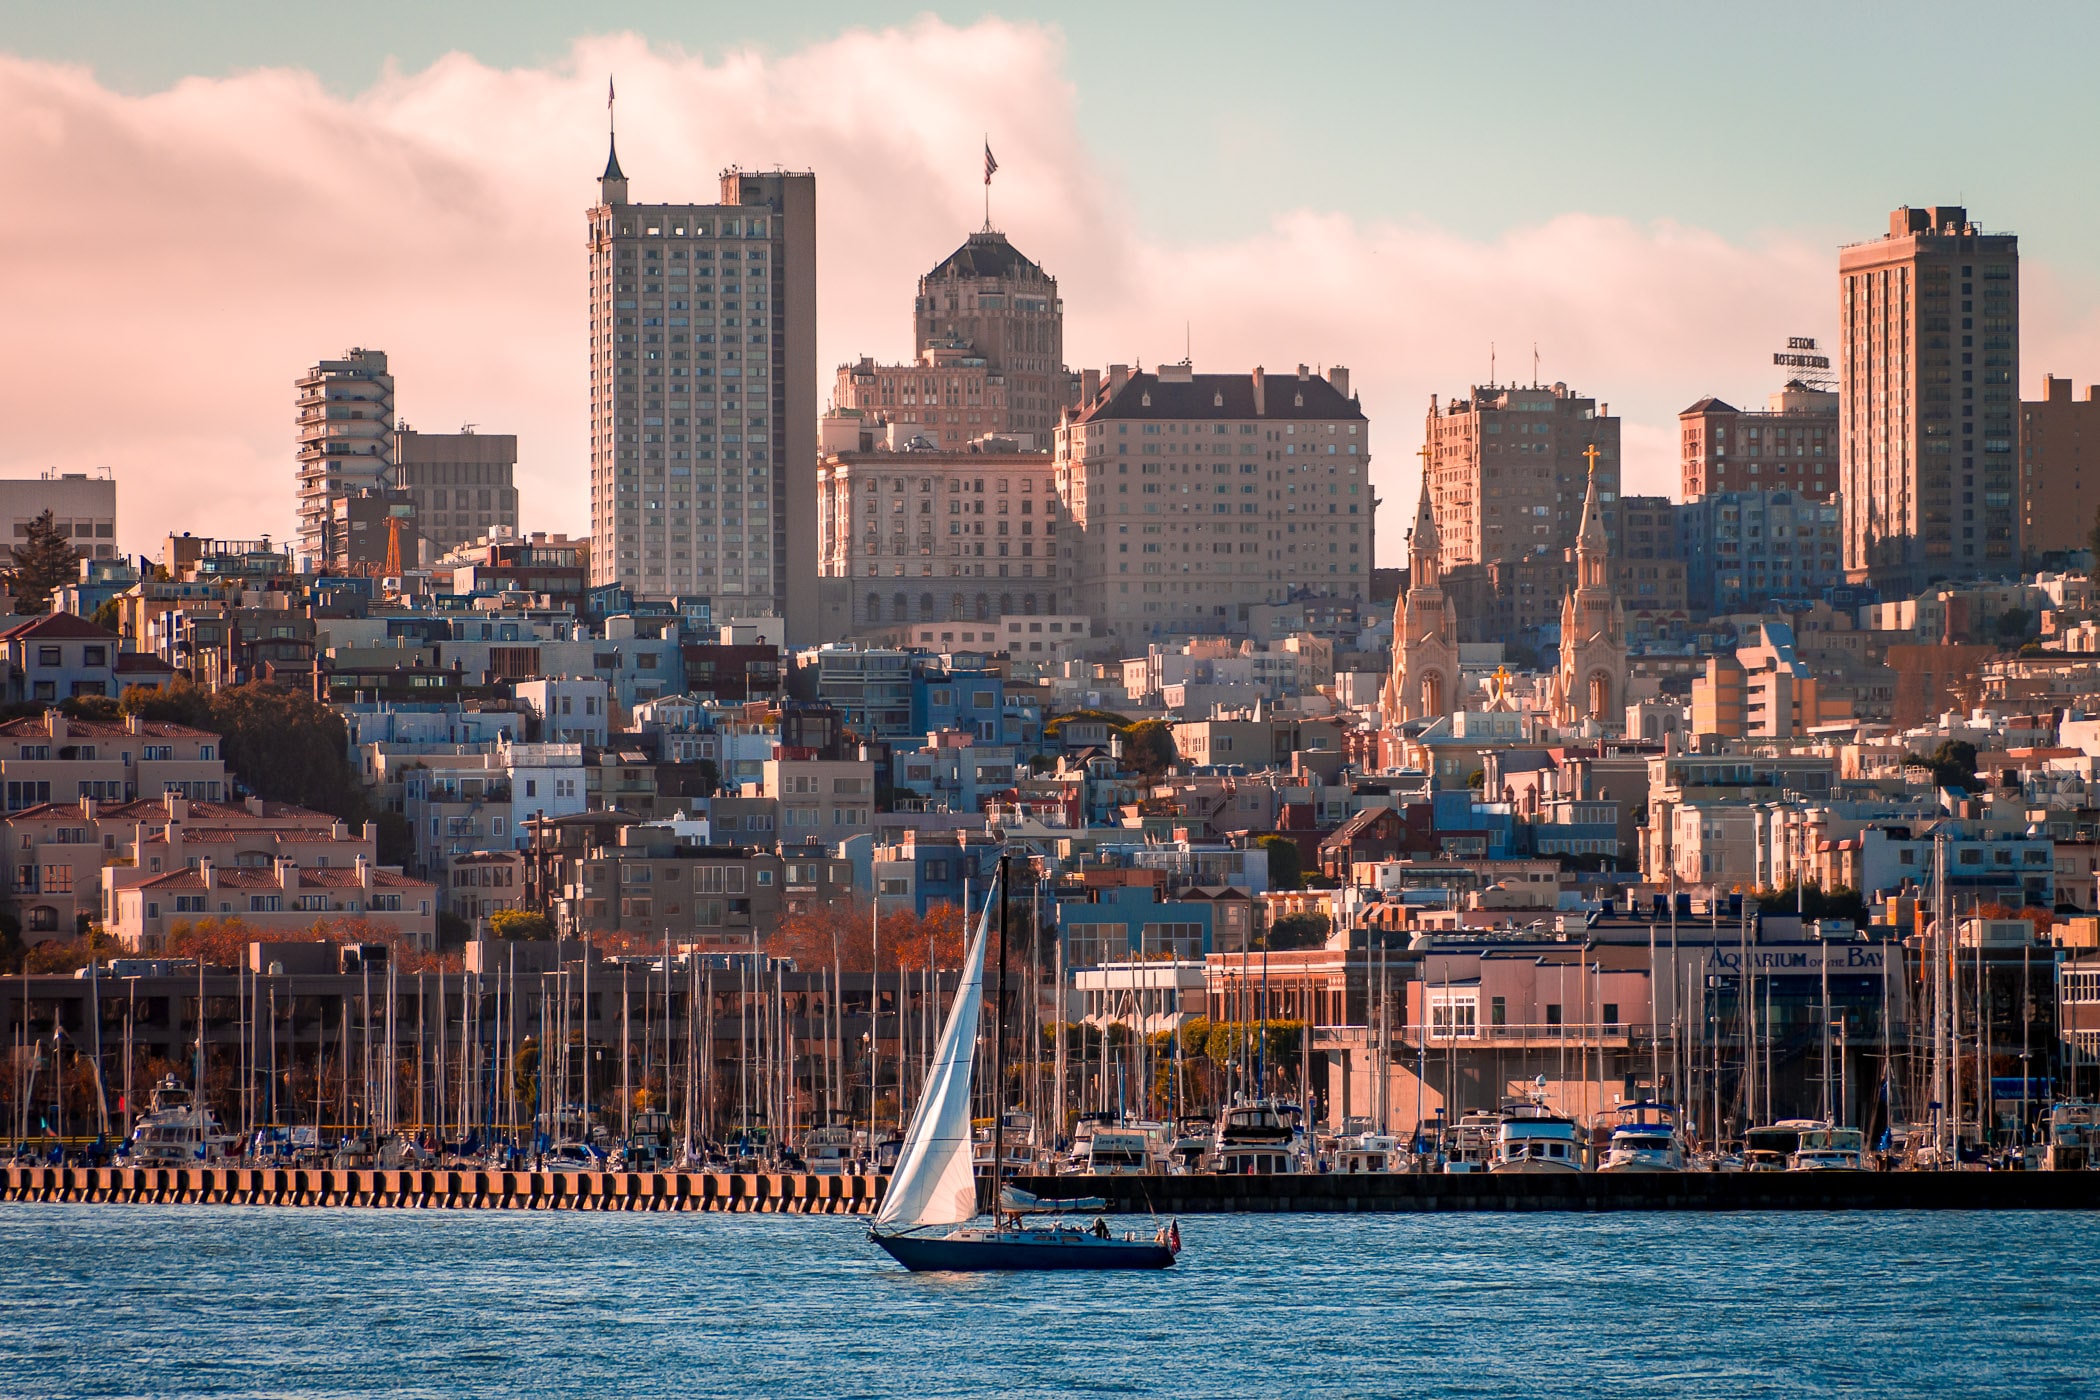 A sailboat cruises San Francisco Bay as the morning sun begins to light up the city.